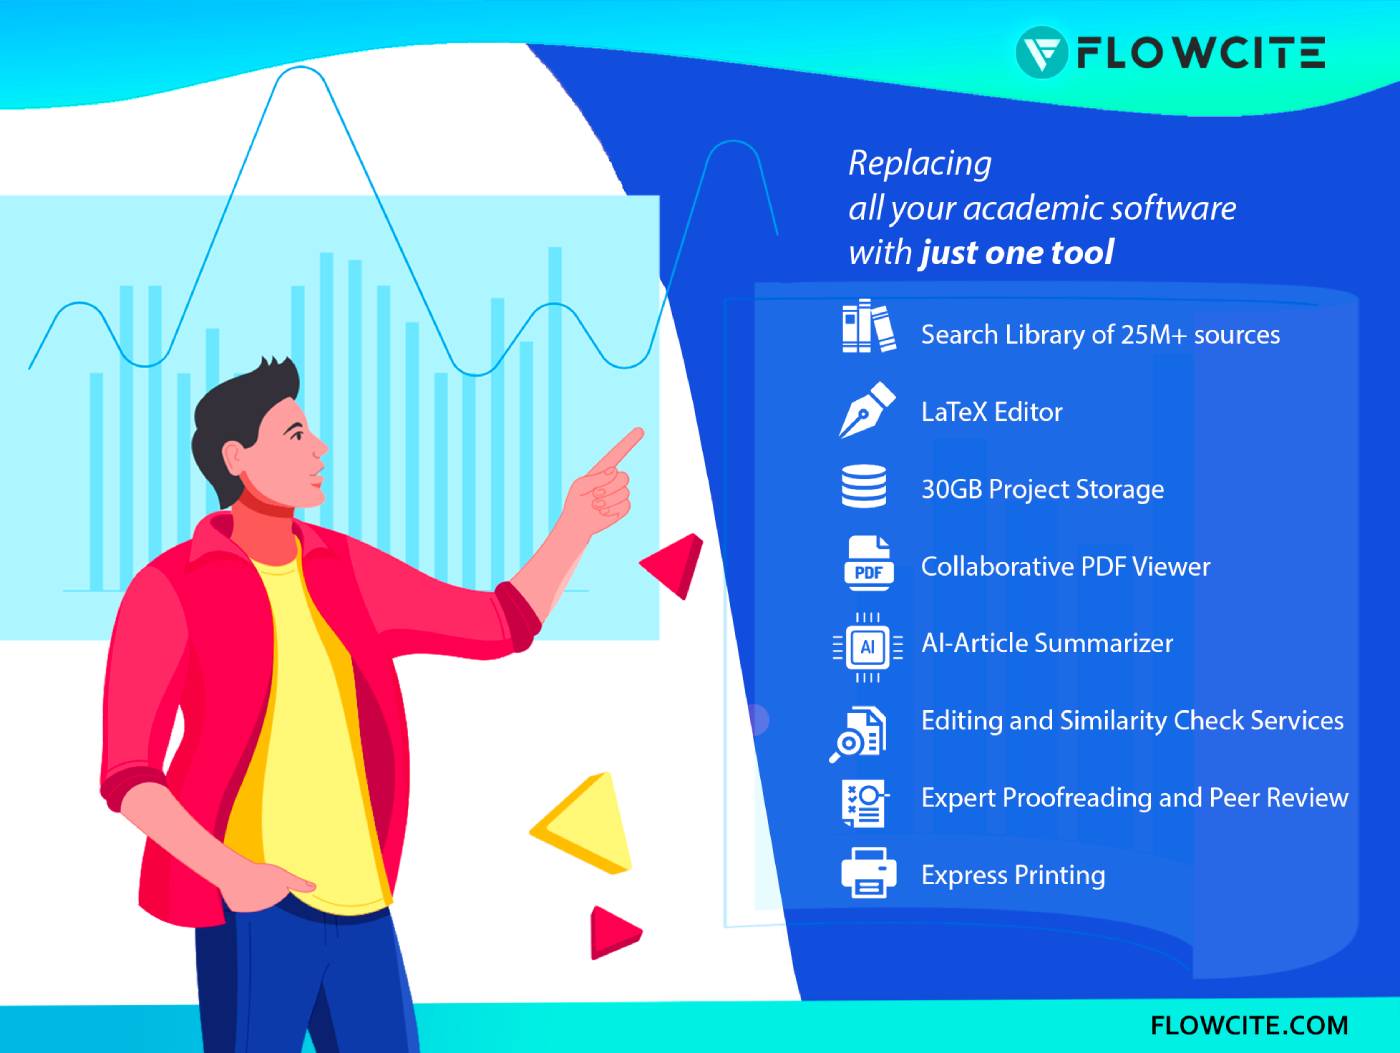 Flowcite v.1.3 : Improved Search Algorithm and Brand New App